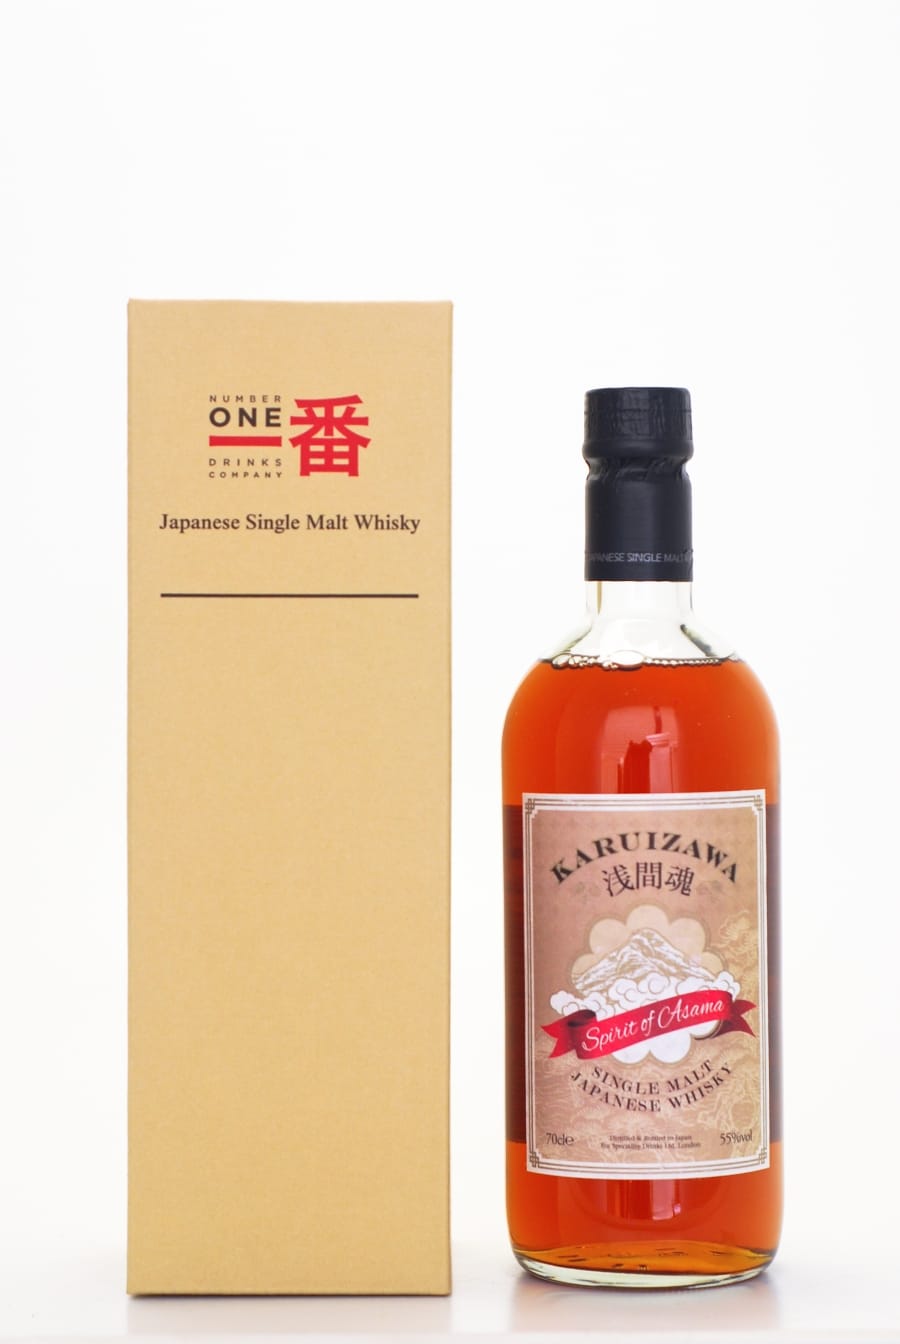 Karuizawa - Spirit of Asama (55%, OB, for Specialty Drinks, 2012) NV